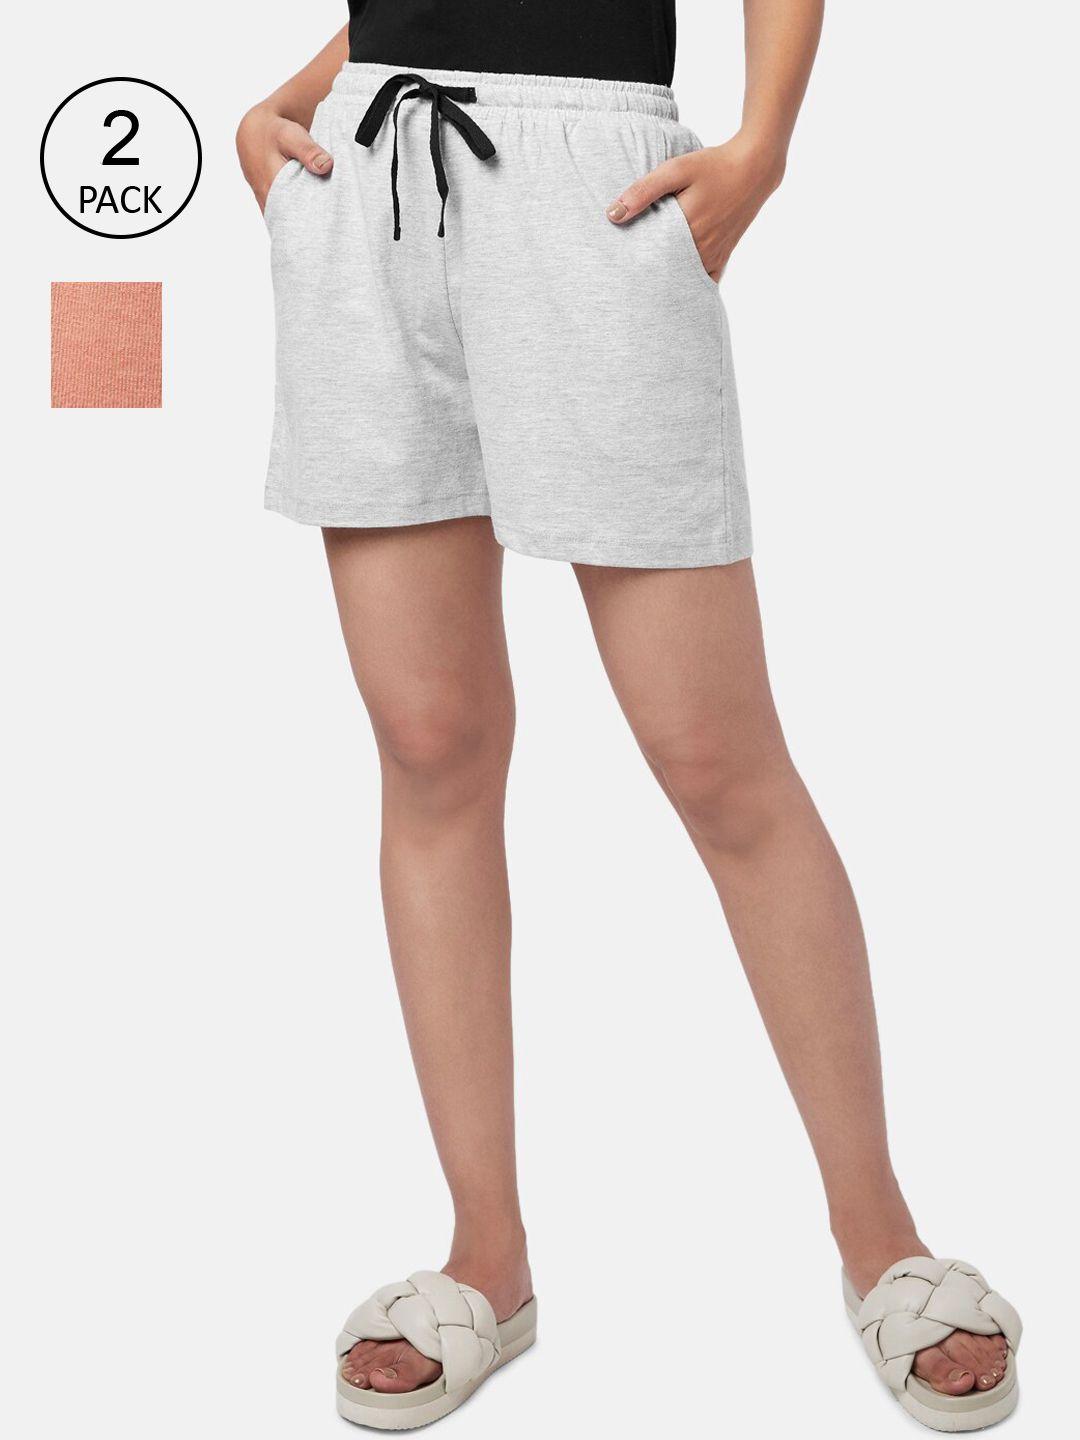 yu by pantaloons women grey & coral pack of 2 cotton regular shorts